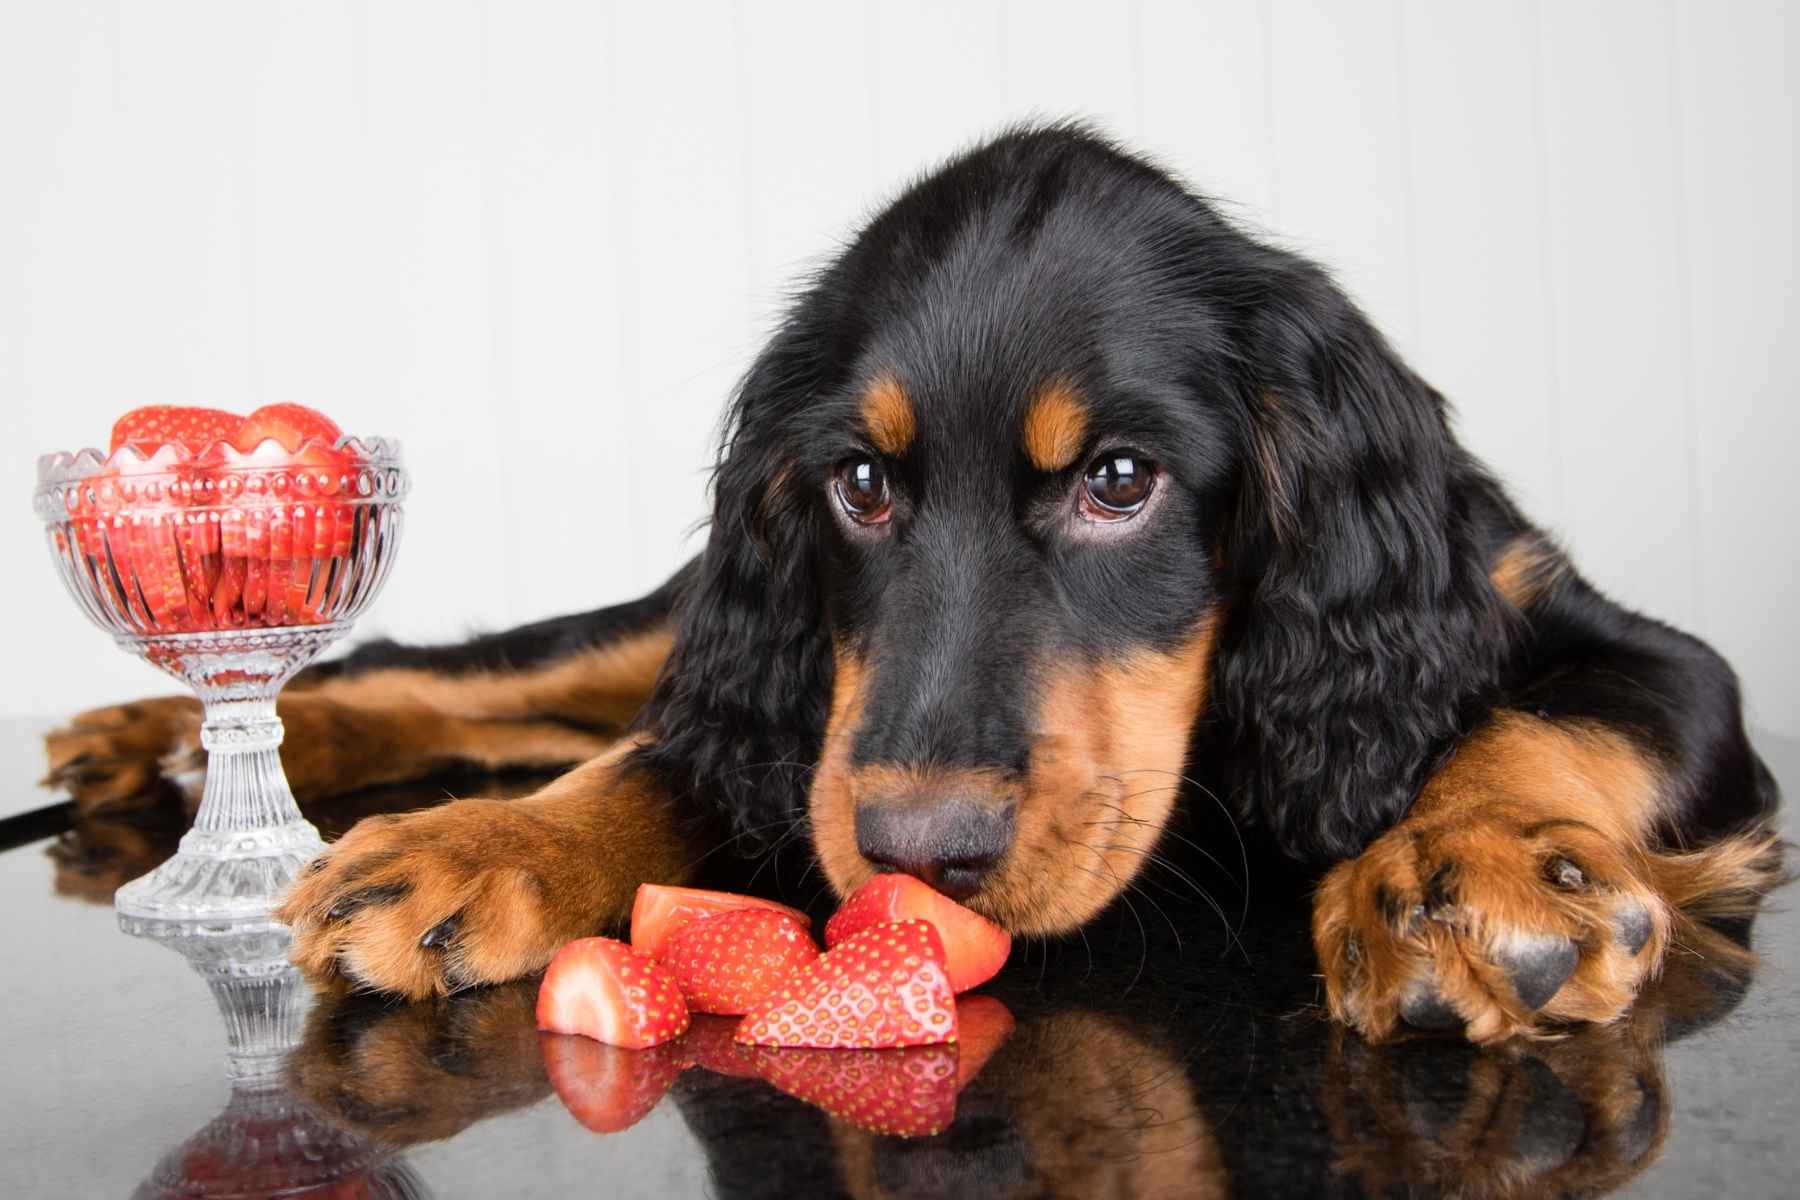 Dog considering eating strawberries